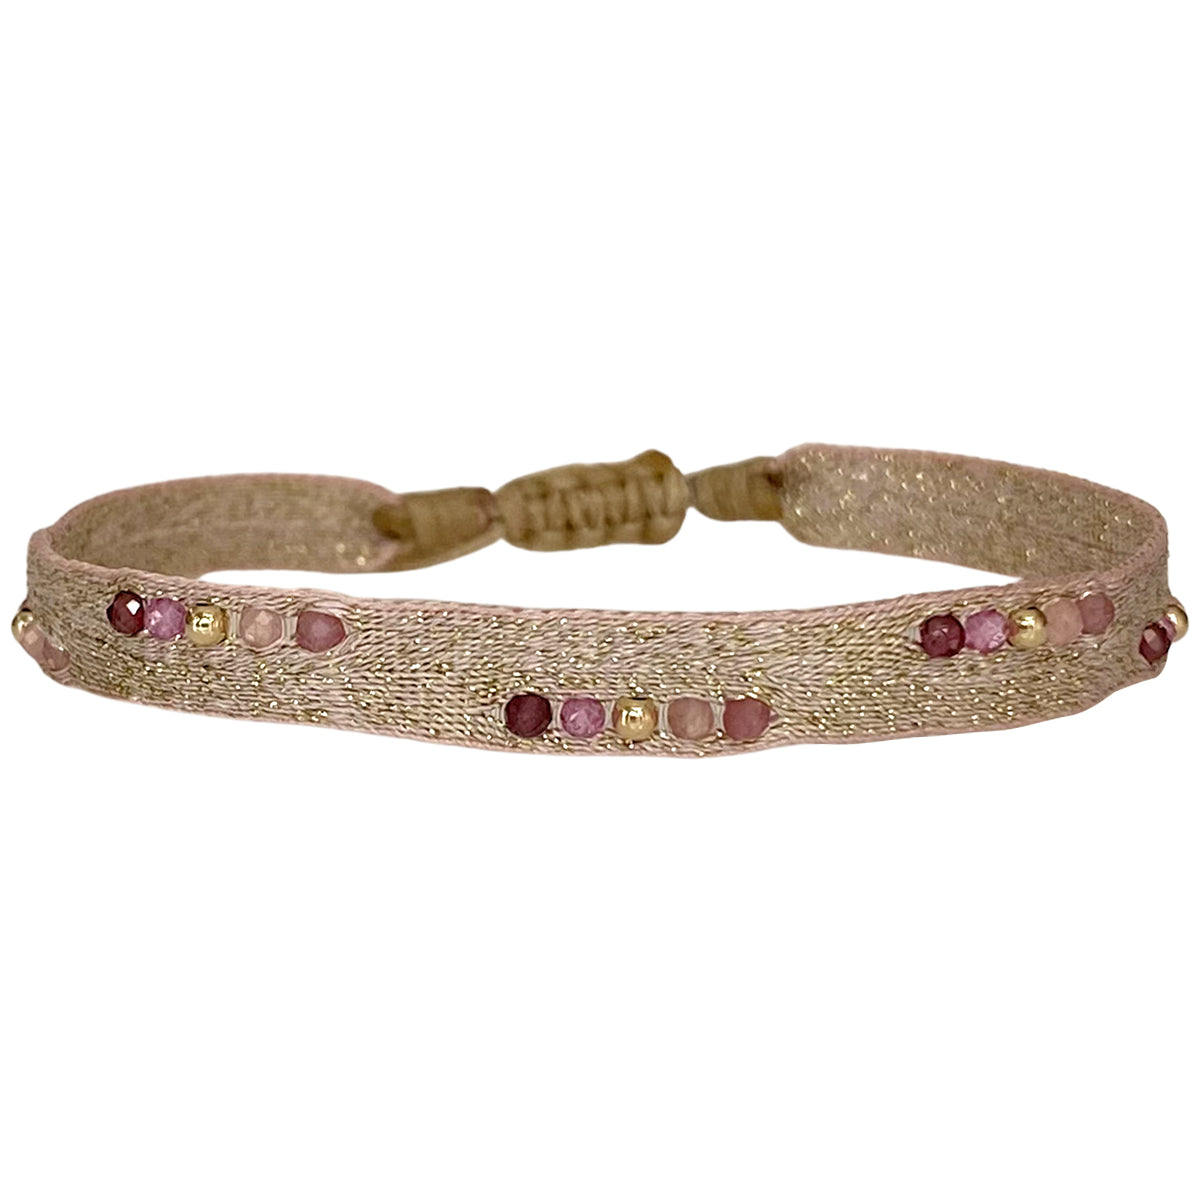 Iris Handwoven Bracelet Featuring Gemstones and Rose Gold Details in Pink Tones